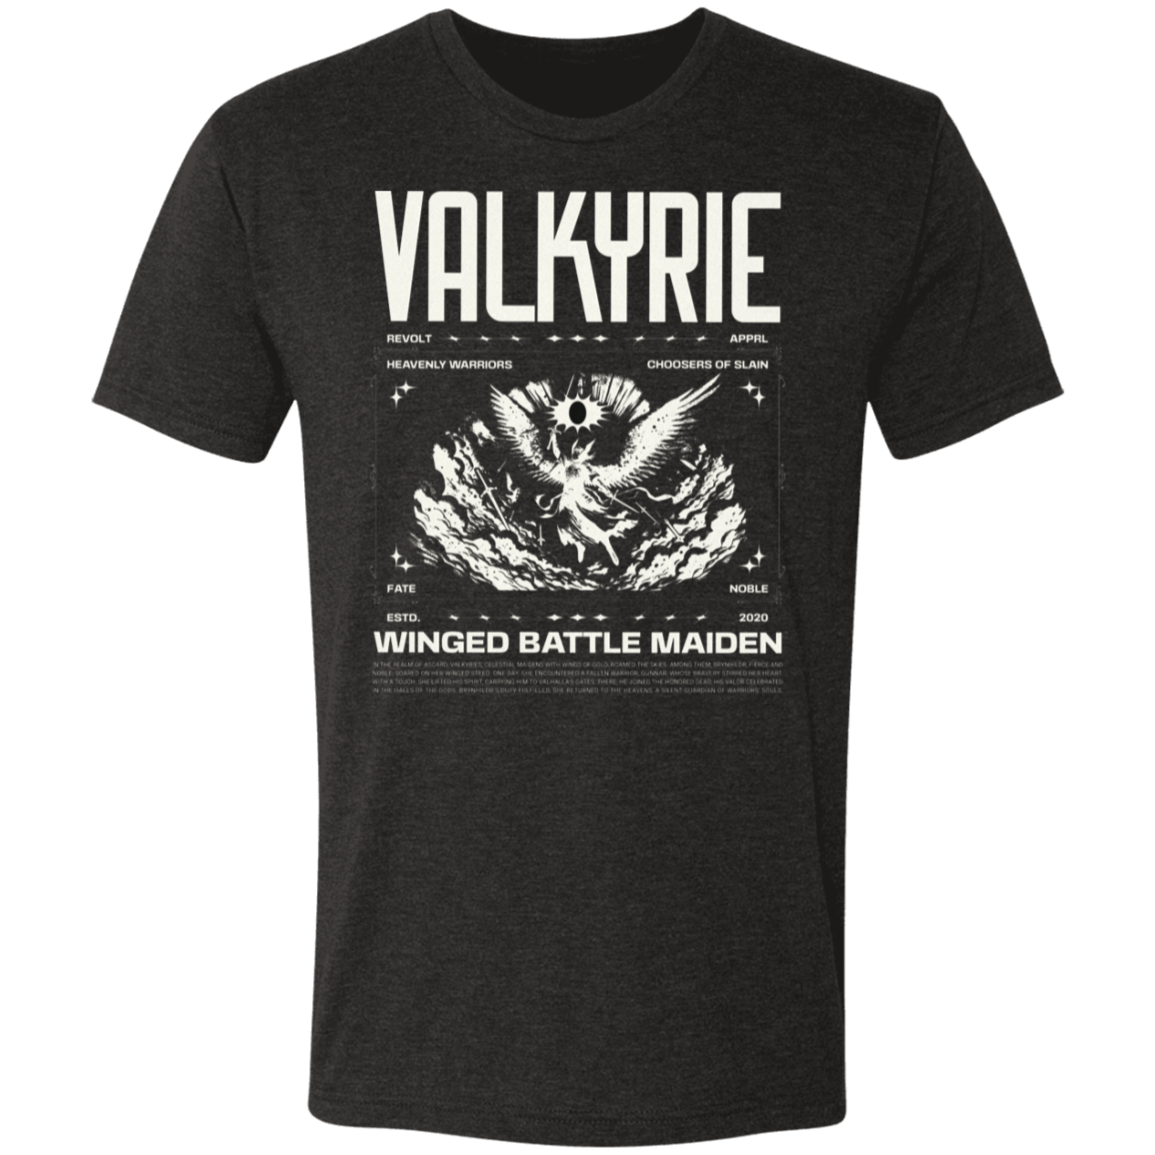 Valkyrie Tri-blend Gym Tee - T-Shirts